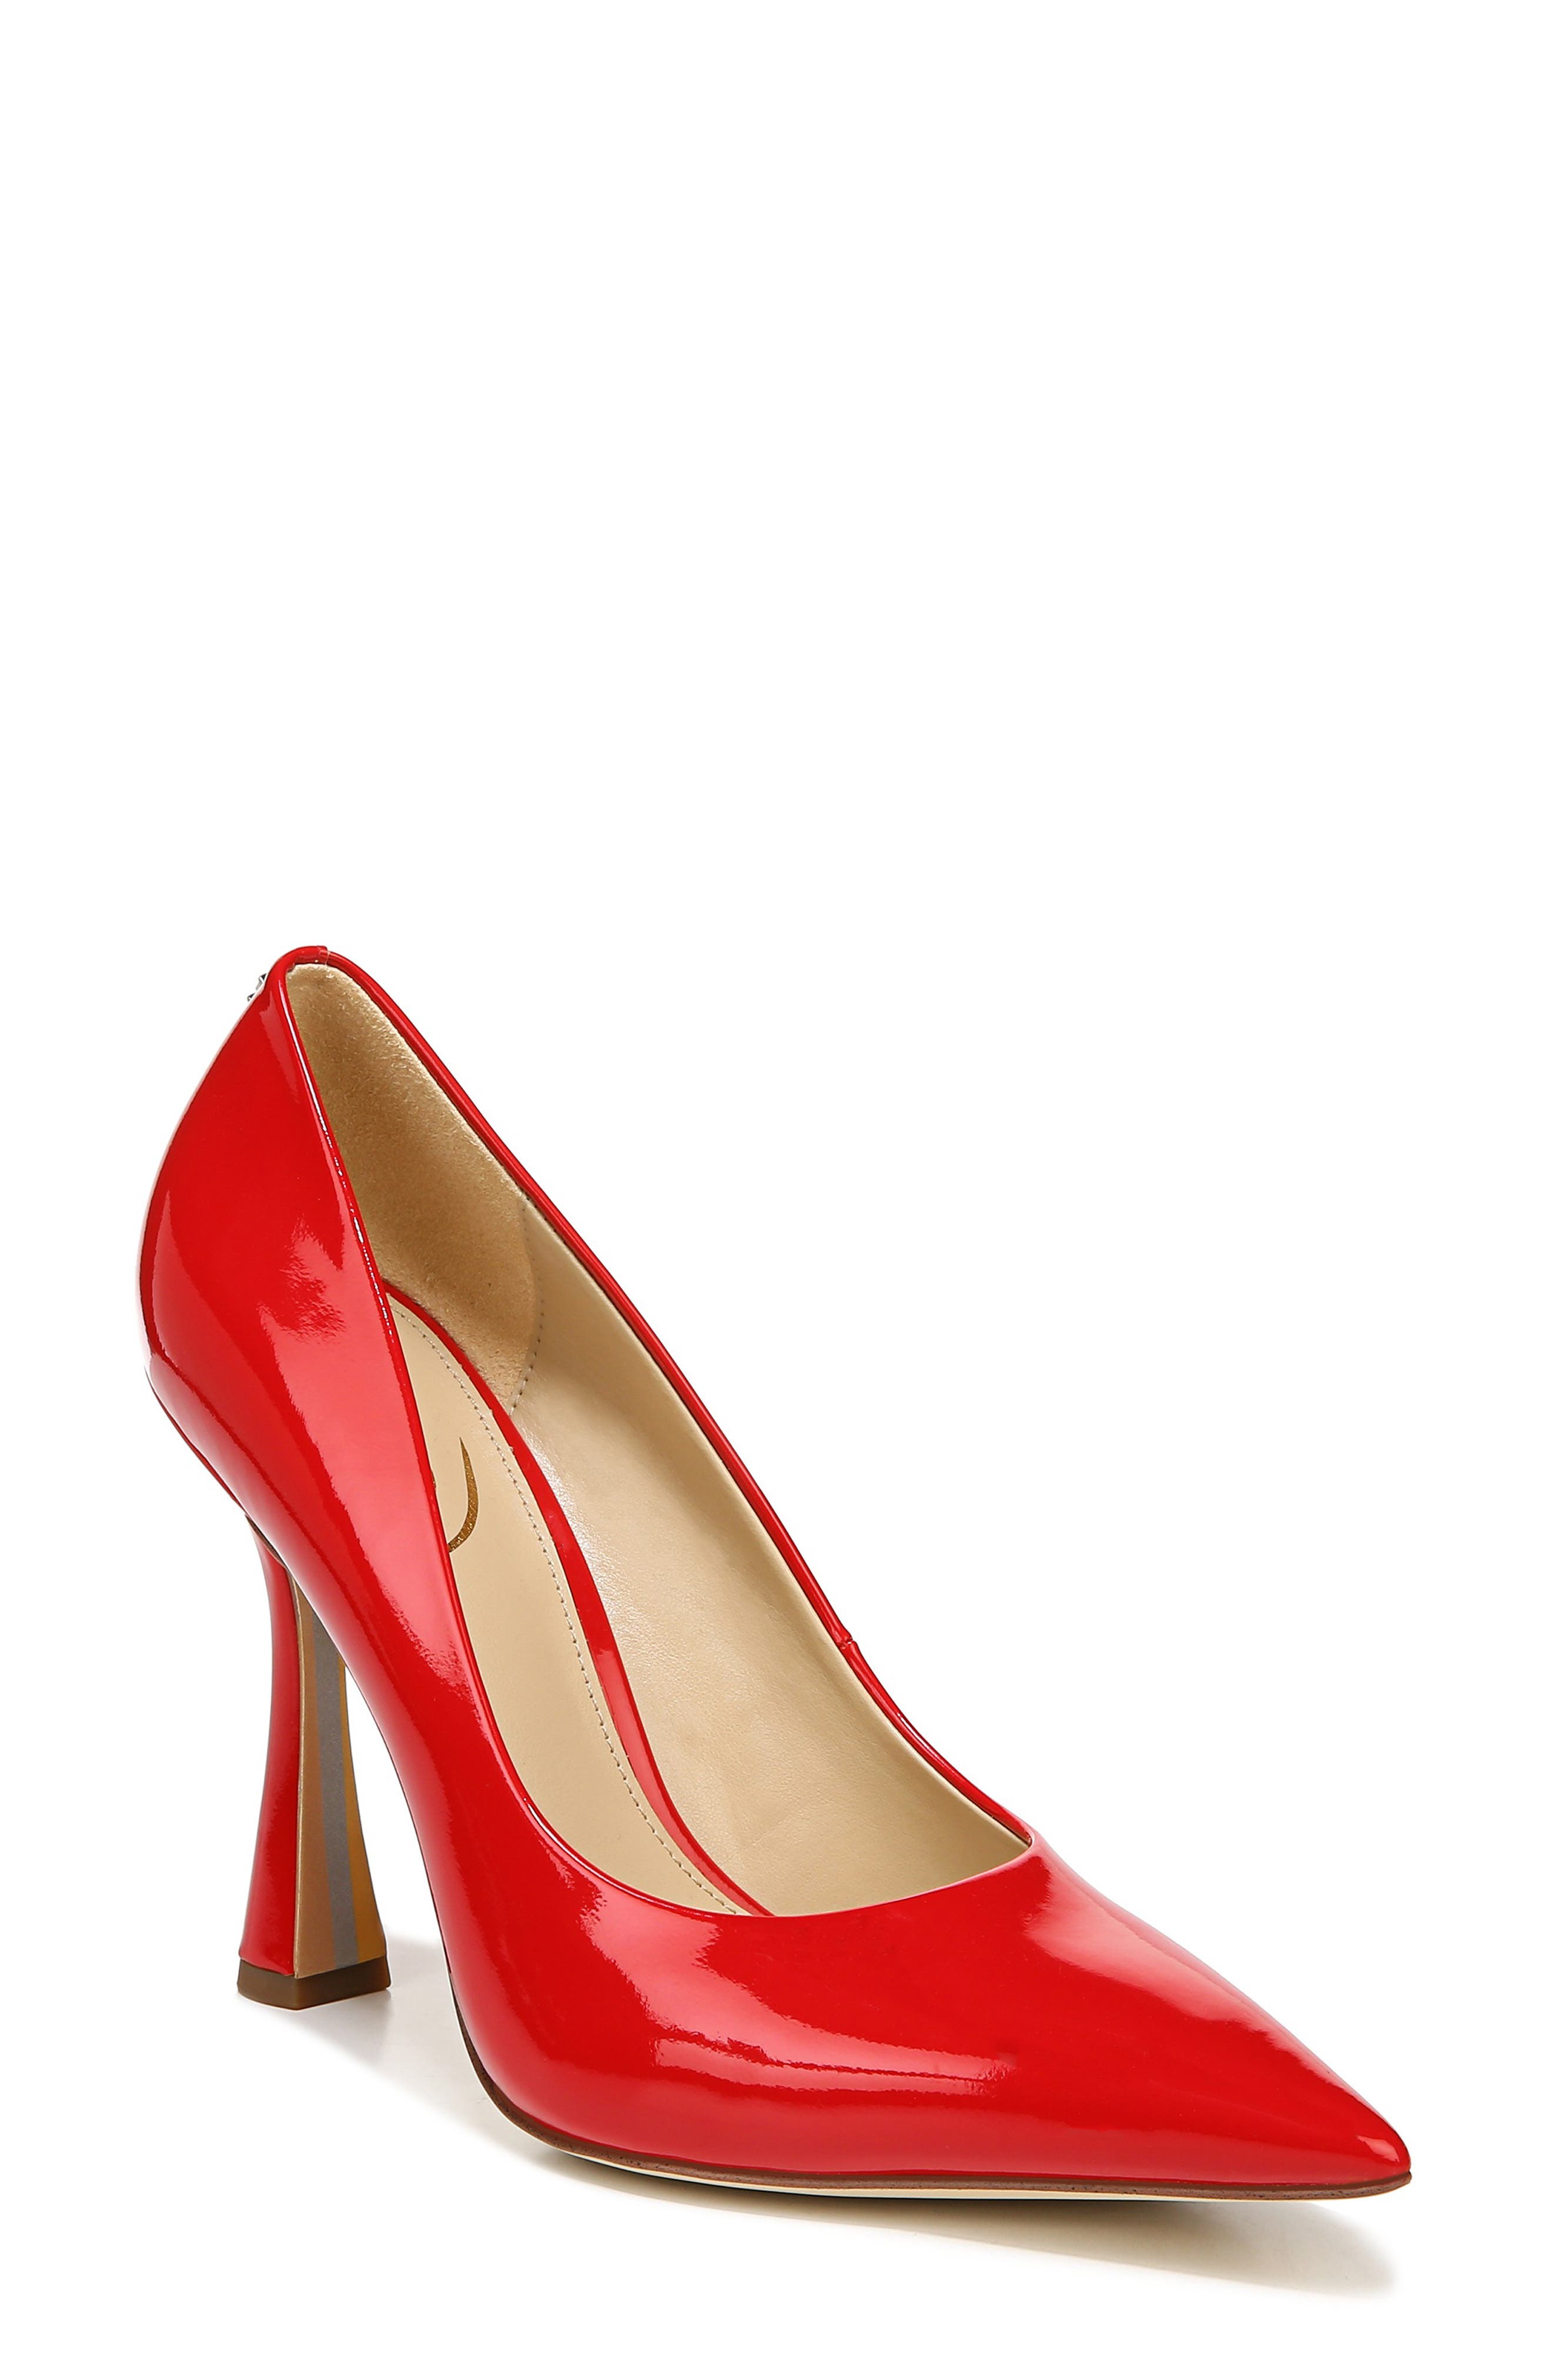 Size 5 Womens Pump Heel Koilla Red ALDO Women Shoes High Heels Heels Heeled Pumps 